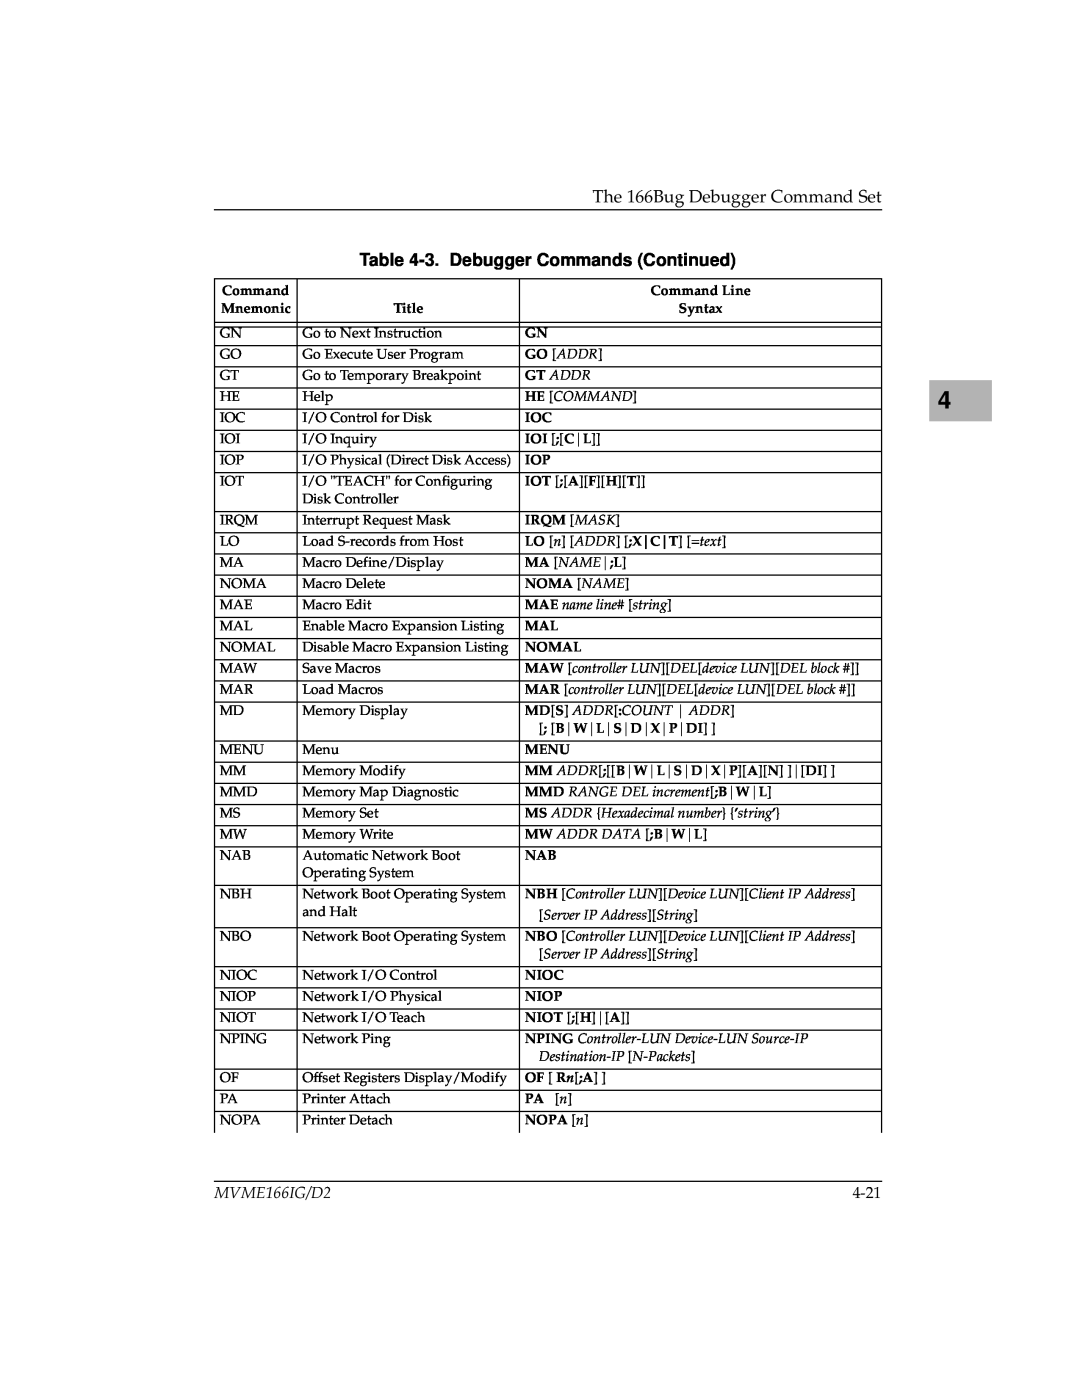 Motorola MVME166D2 manual 3. Debugger Commands Continued, The 166Bug Debugger Command Set, MVME166IG/D2, 4-21 